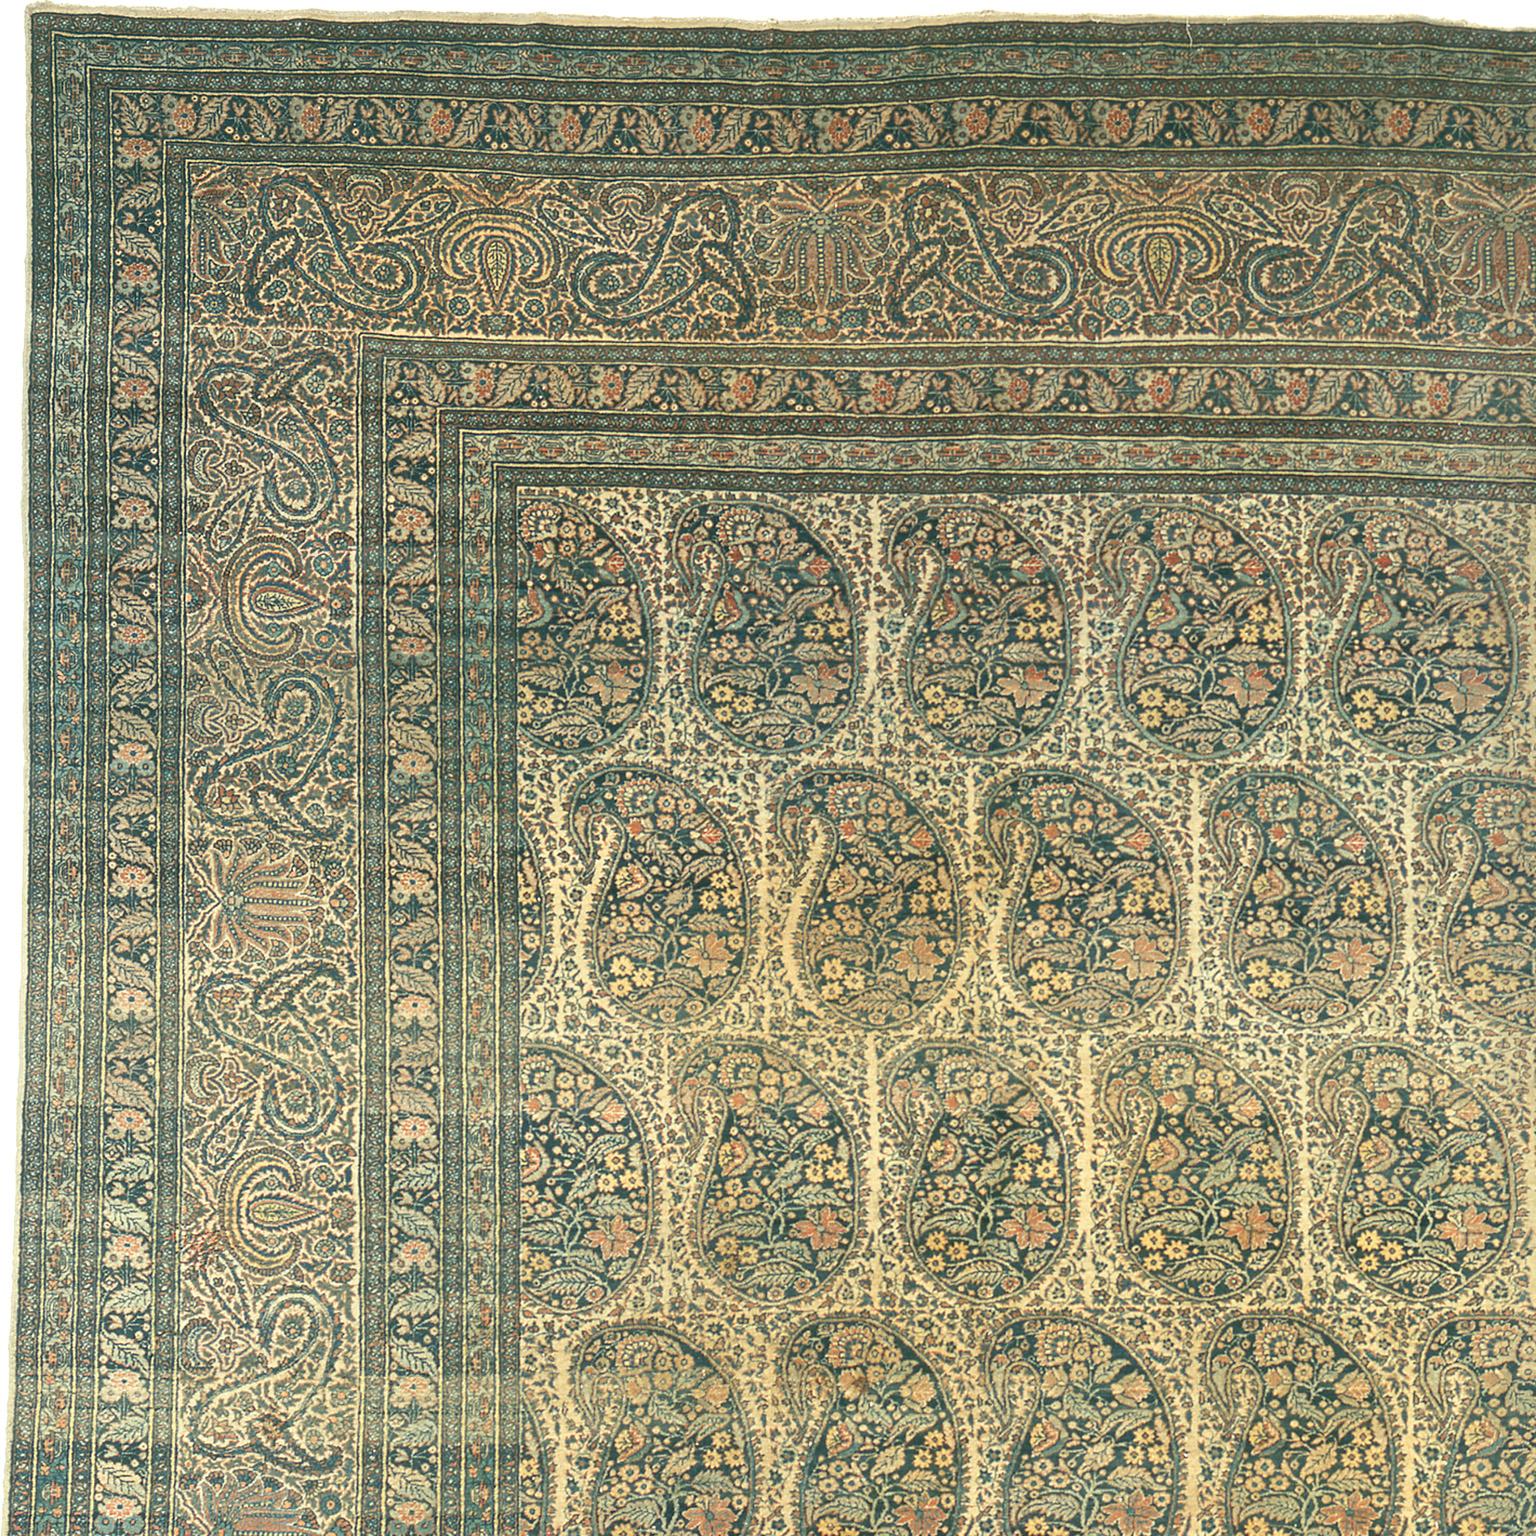 Persia, circa 1880
Measures: 20'0